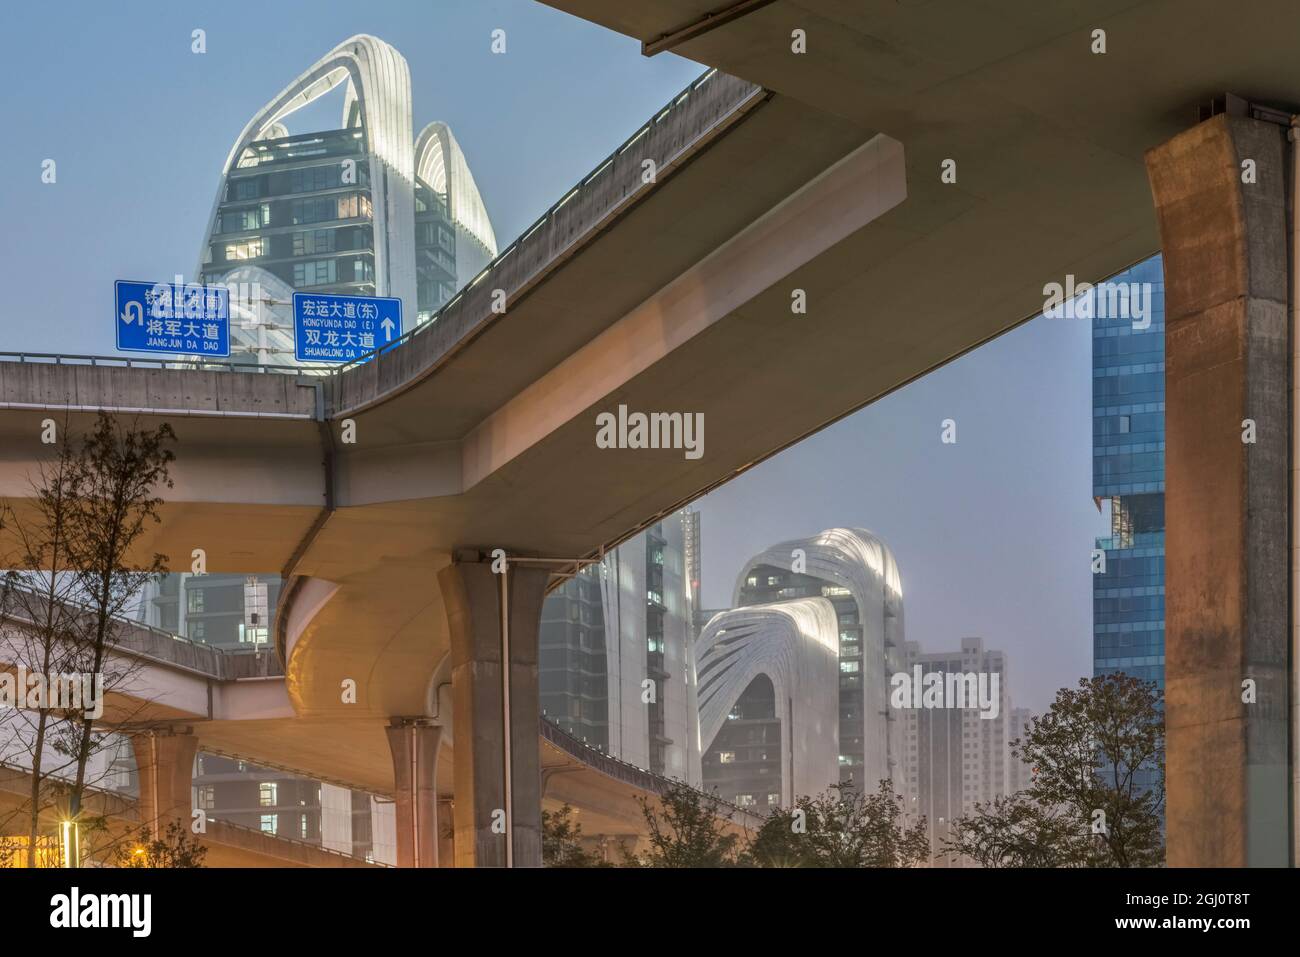 China, Jiangsu, Nanjing. Autopista y edificios modernos cerca de la estación sur de Nanjing. Foto de stock